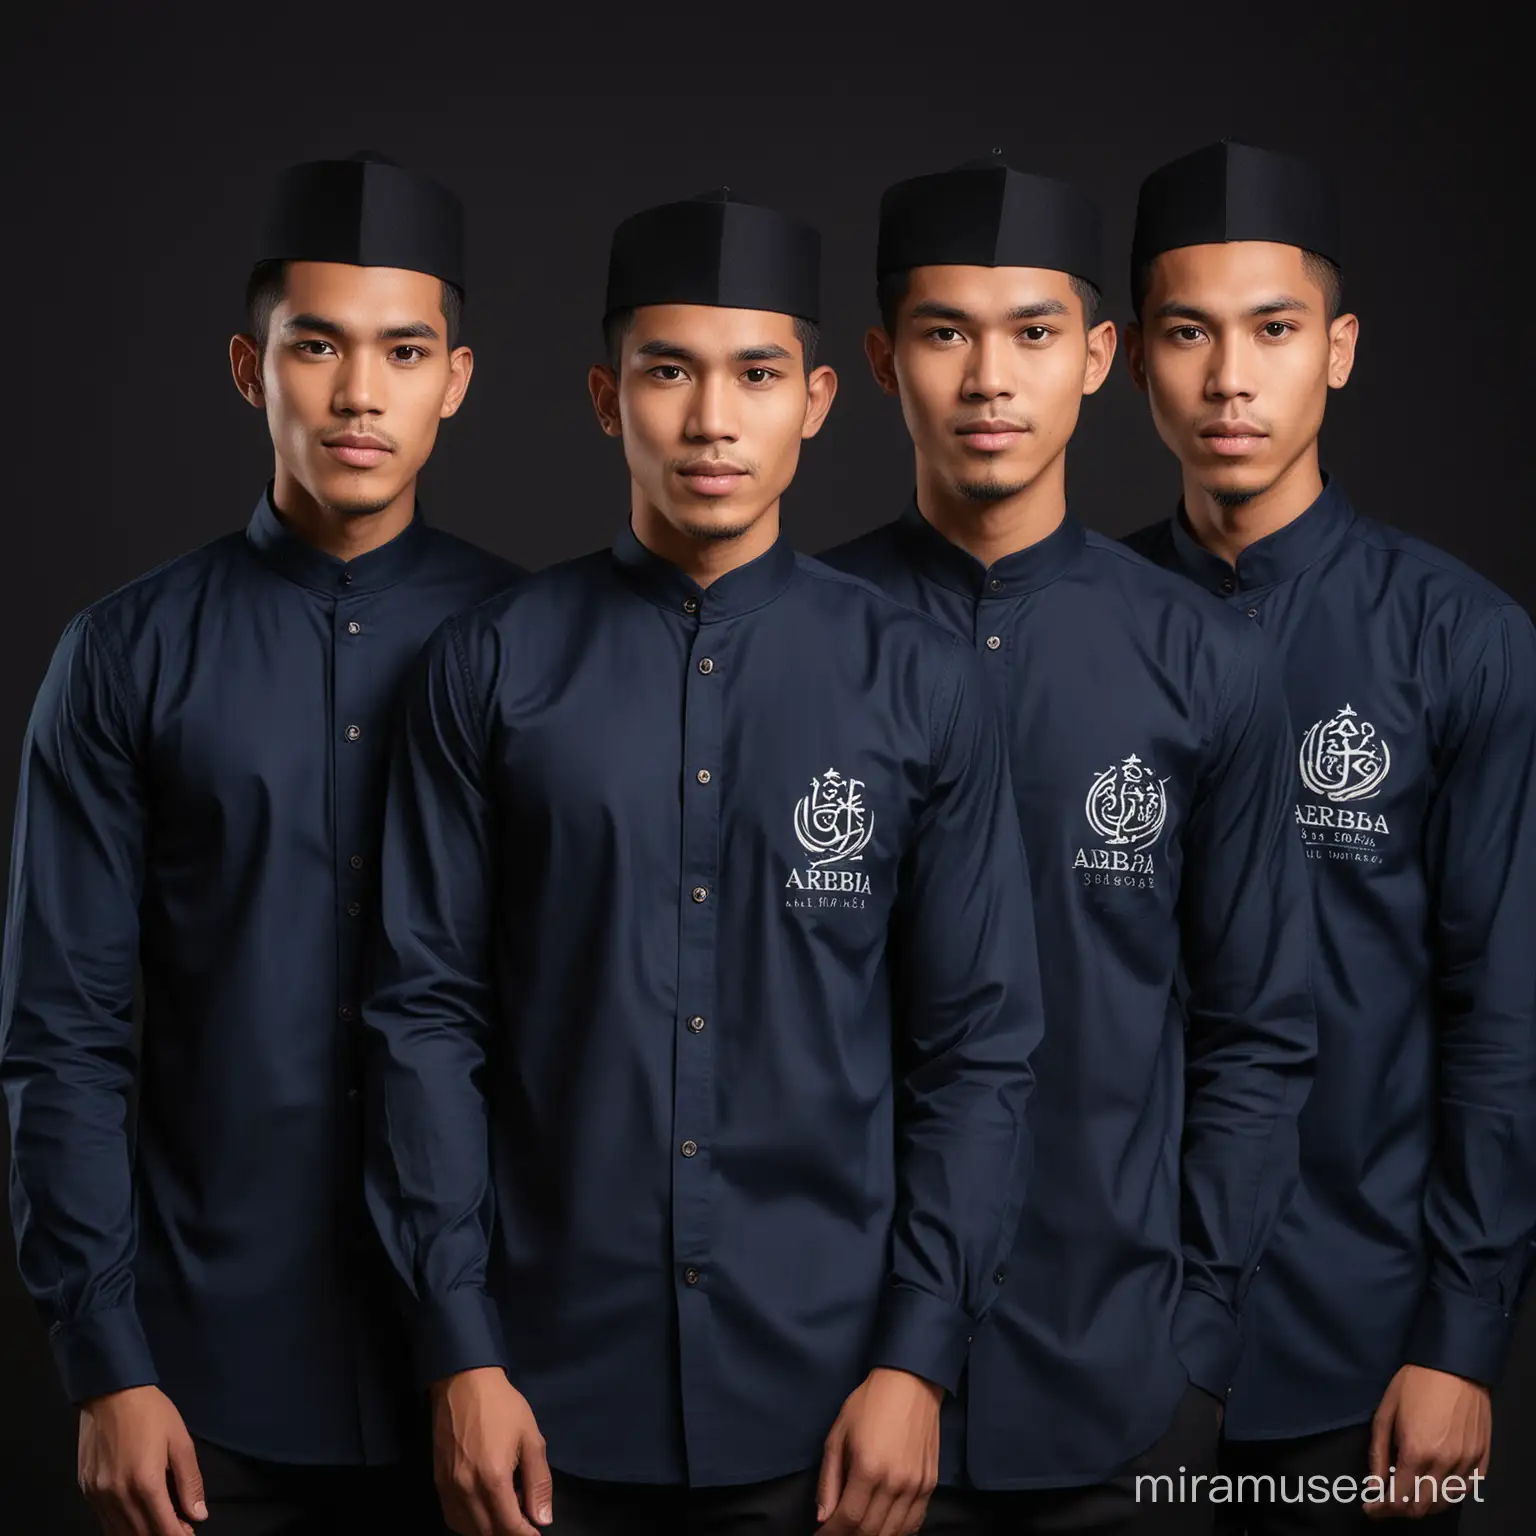 Lima orang pemuda tampan, wajah asli indonesia, memakai baju koko mewah, warna biru navi, busana muslim, baiground layar studio hitam, ber logo "ARREBA"